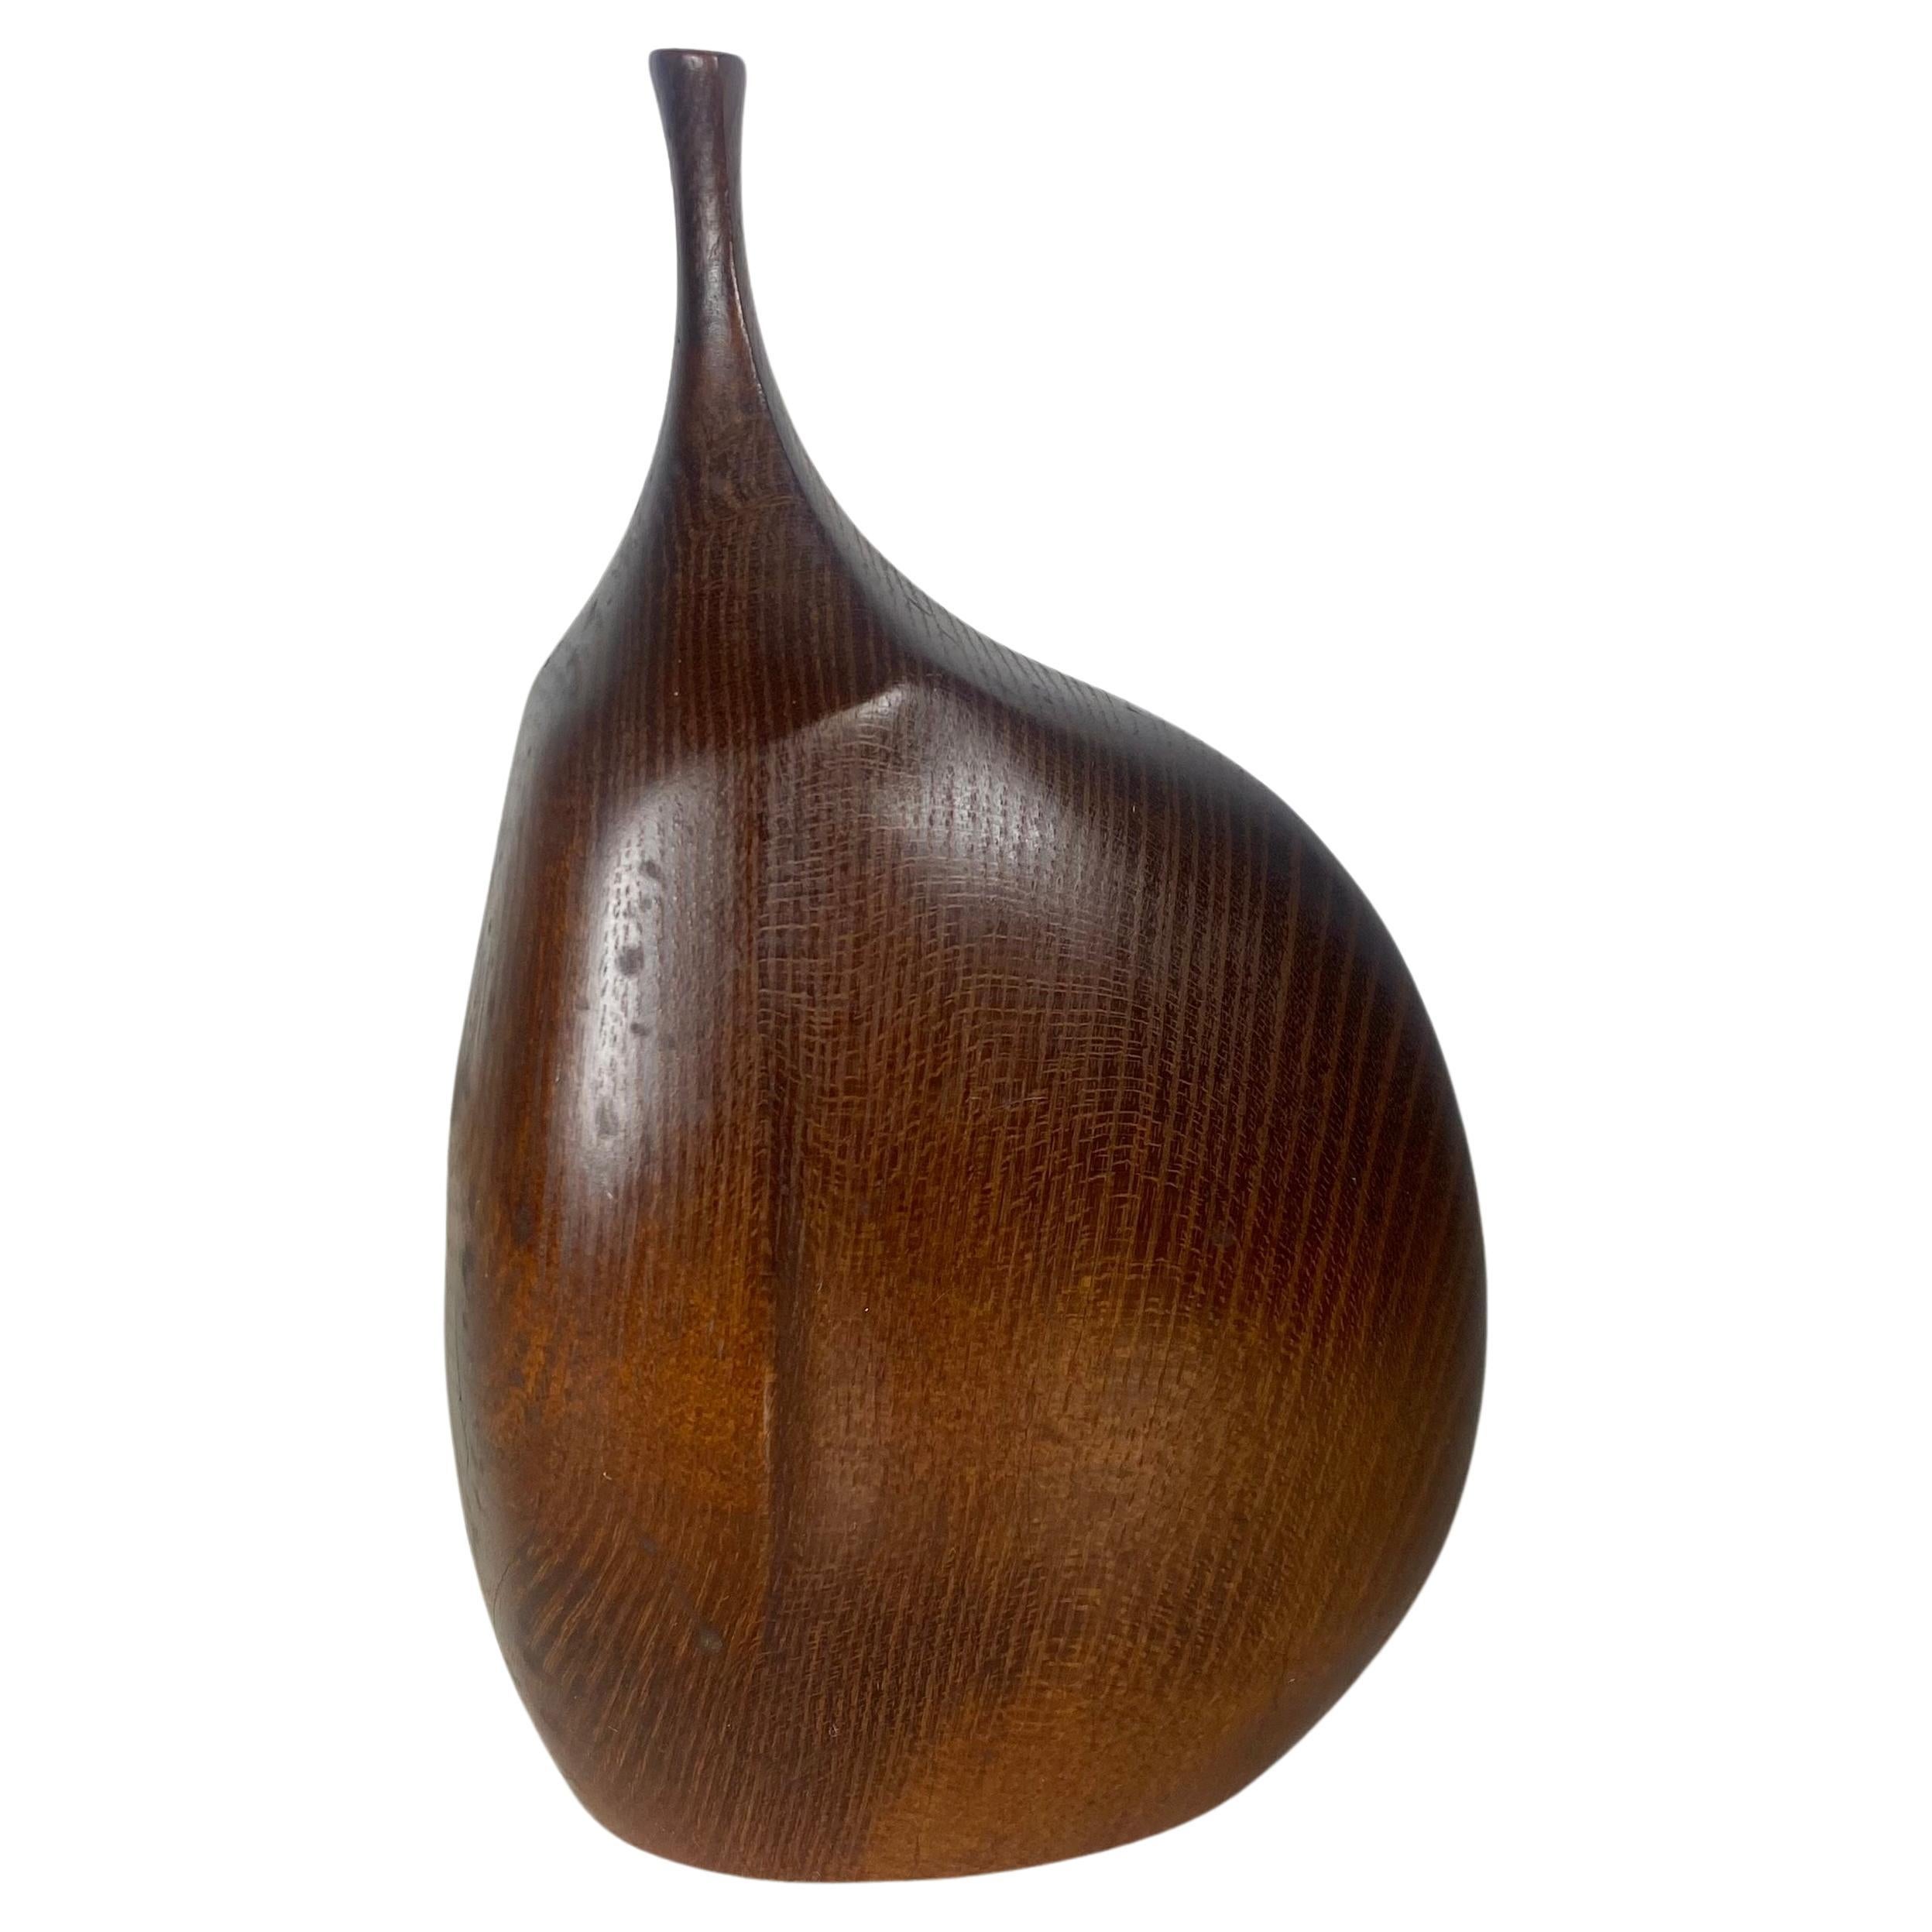 Walnut Biomorphic vase by California Designer Craftsman, Doug Ayers, c. 1960